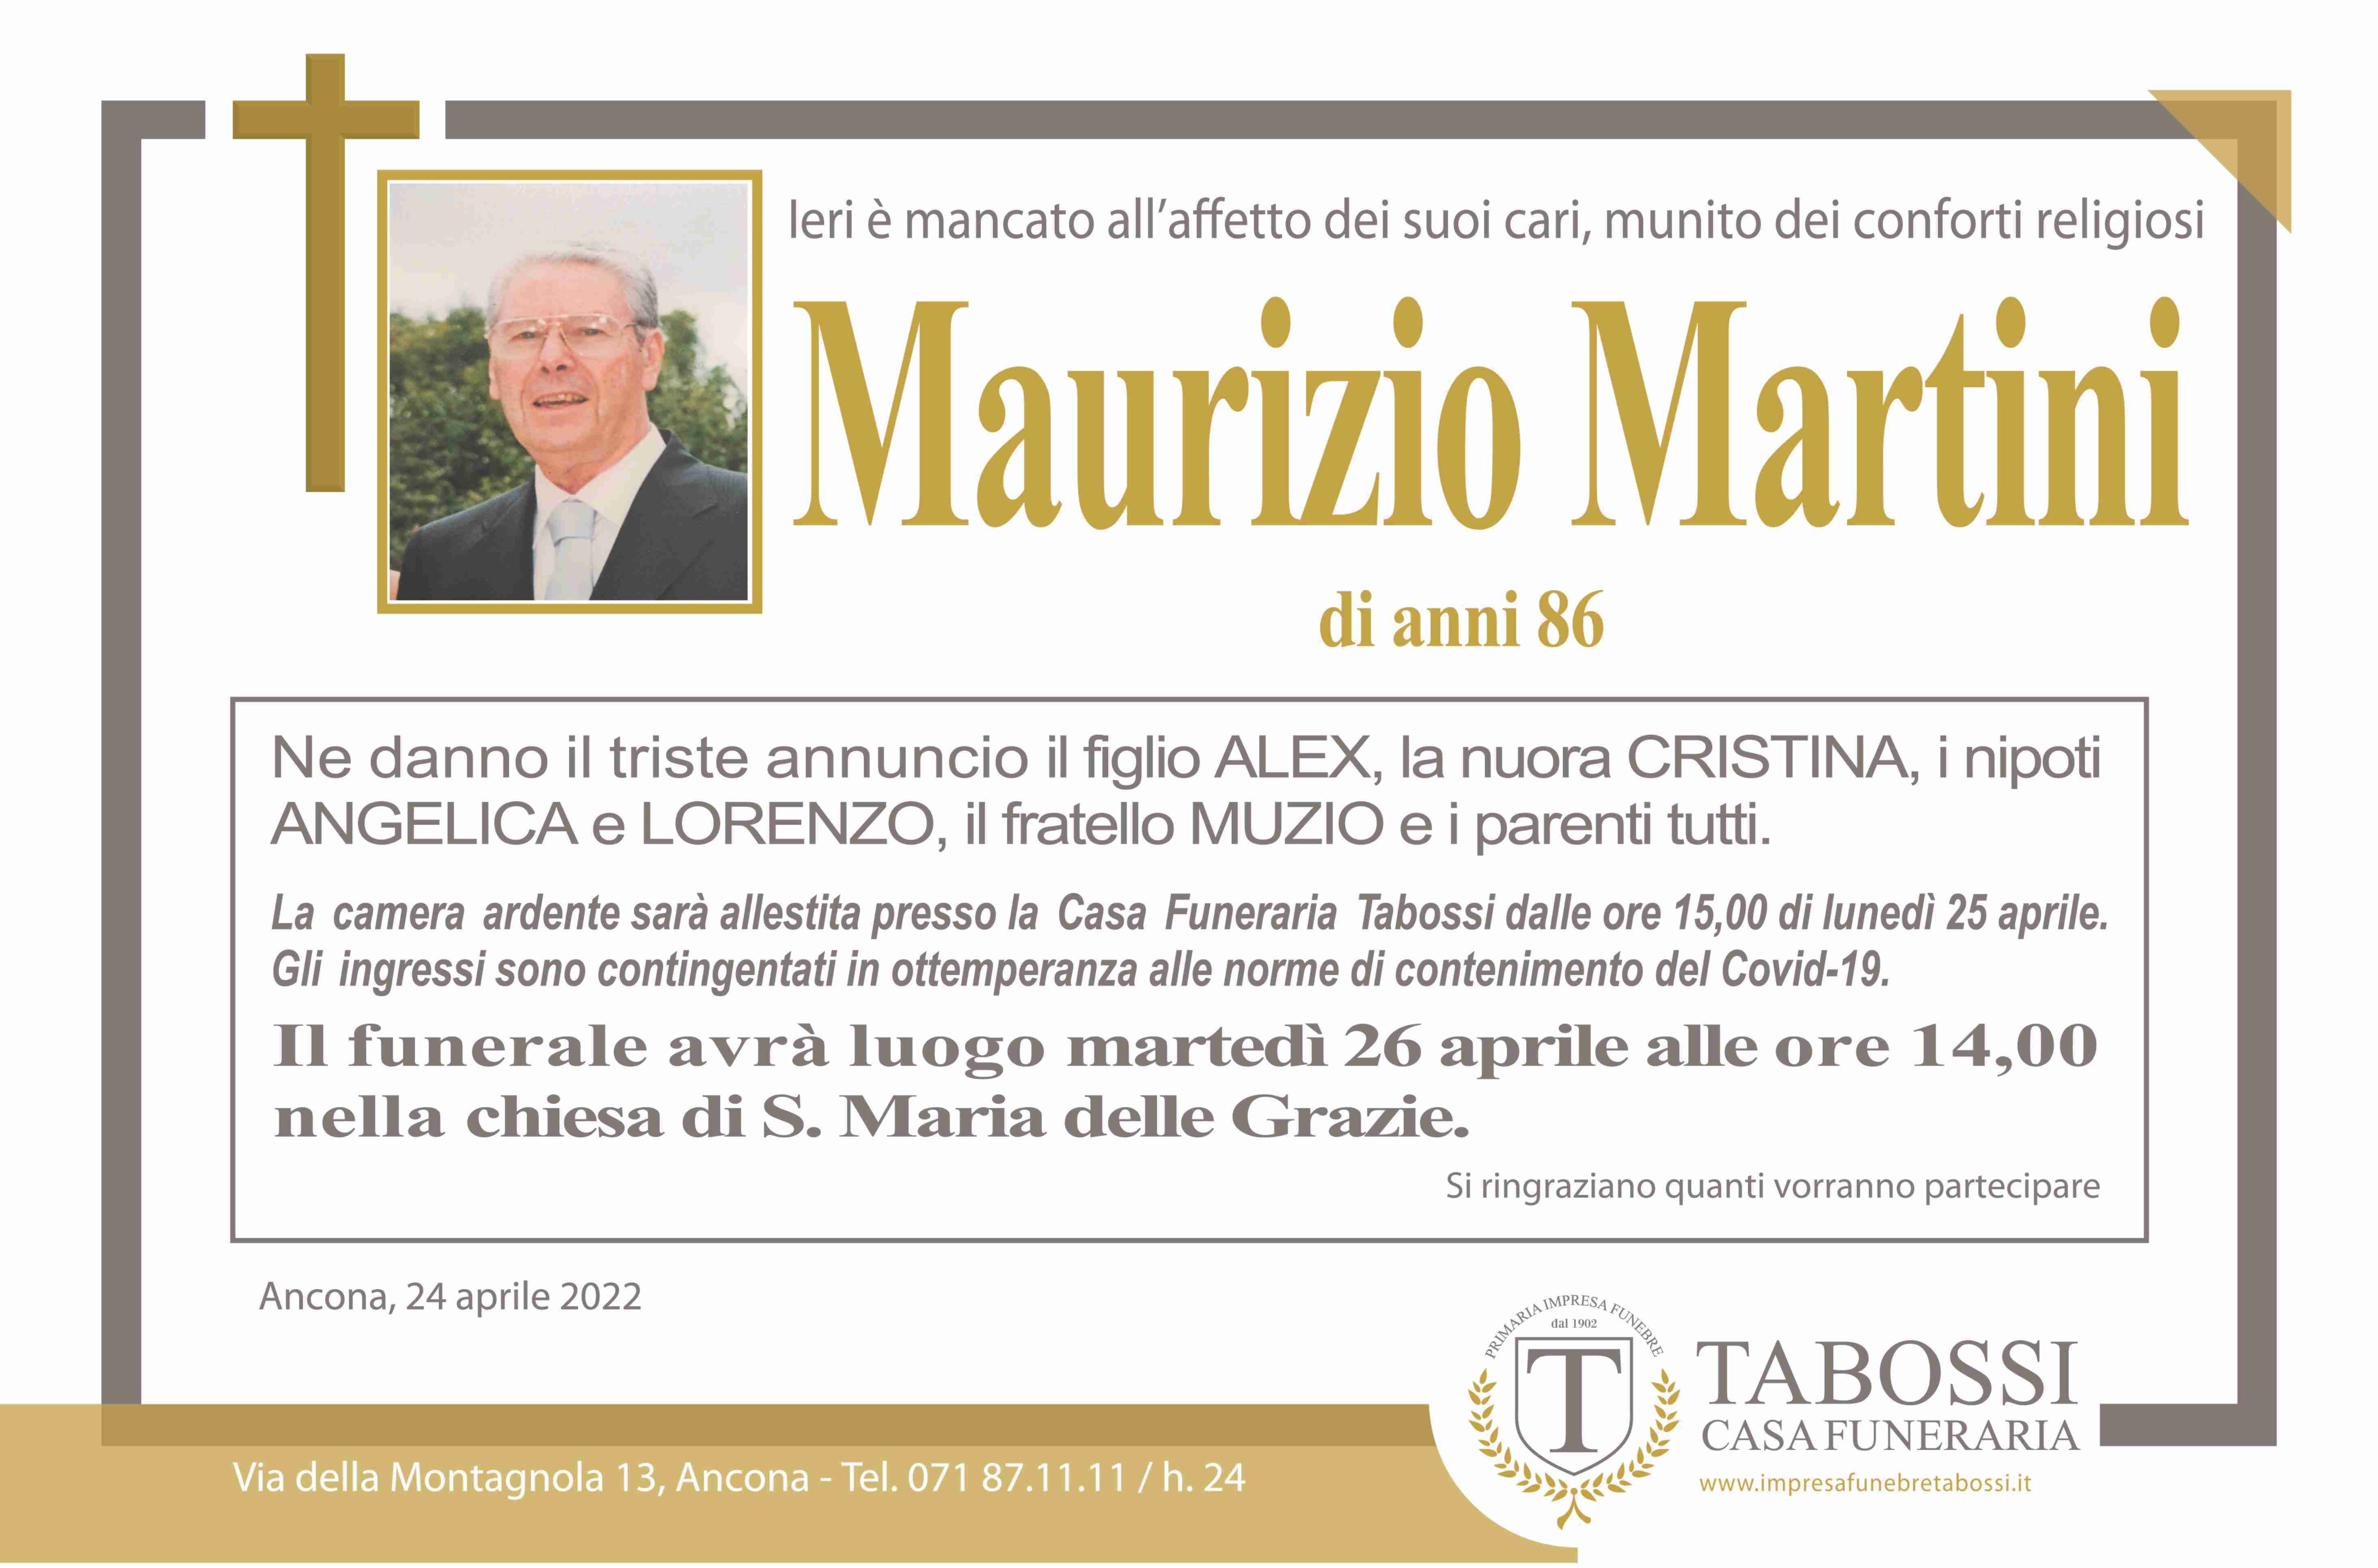 Maurizio Martini